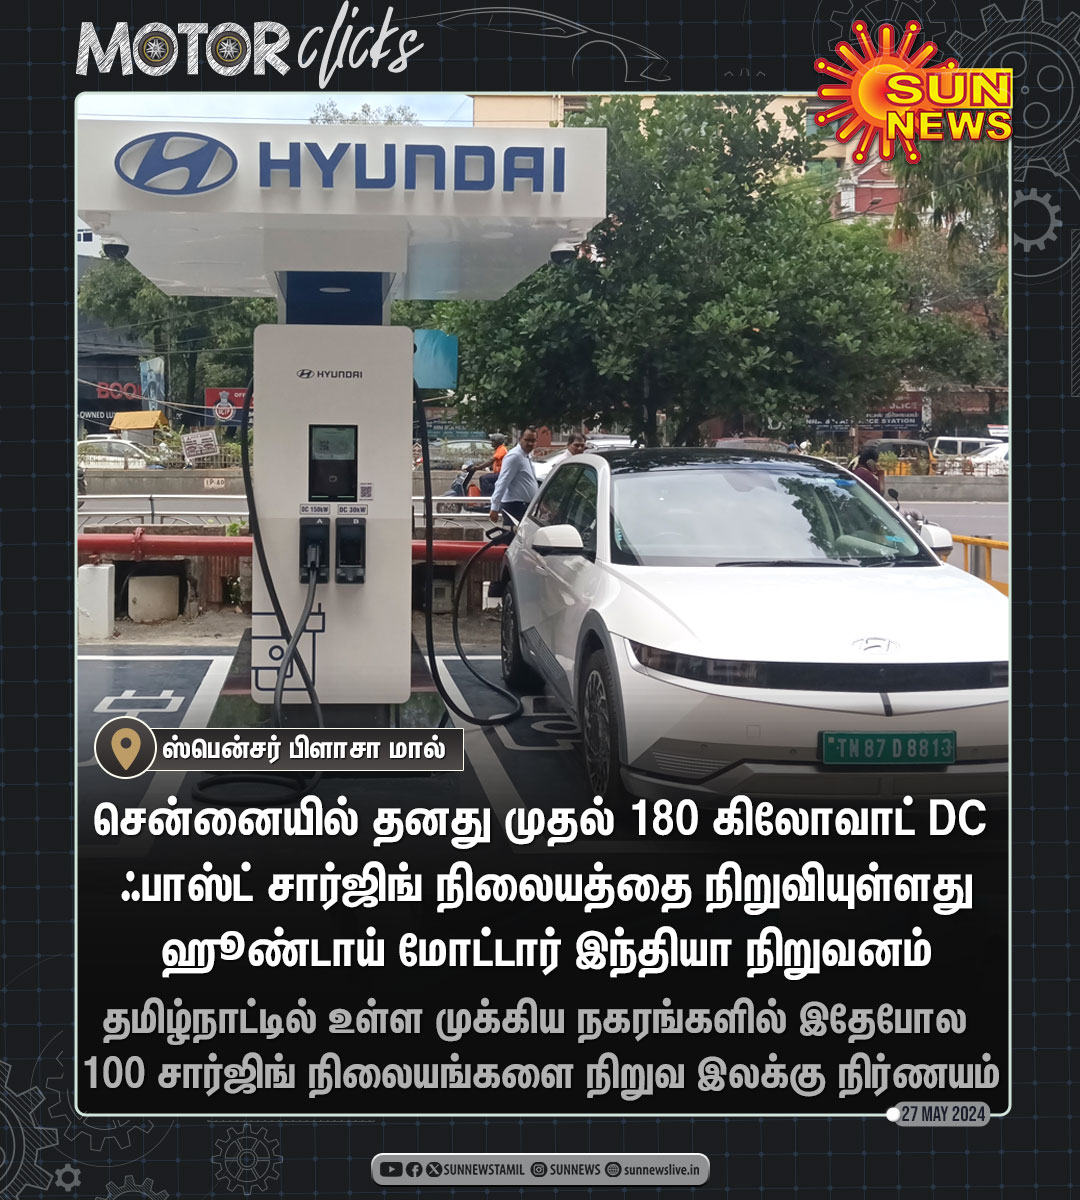 #MotorClicks | சென்னை ஸ்பென்சர் பிளாசா மாலில் ஹூண்டாய் ஃபாஸ்ட் சார்ஜிங் நிலையம் #SunNews | #Hyundai | #ChargingStation | @HyundaiIndia